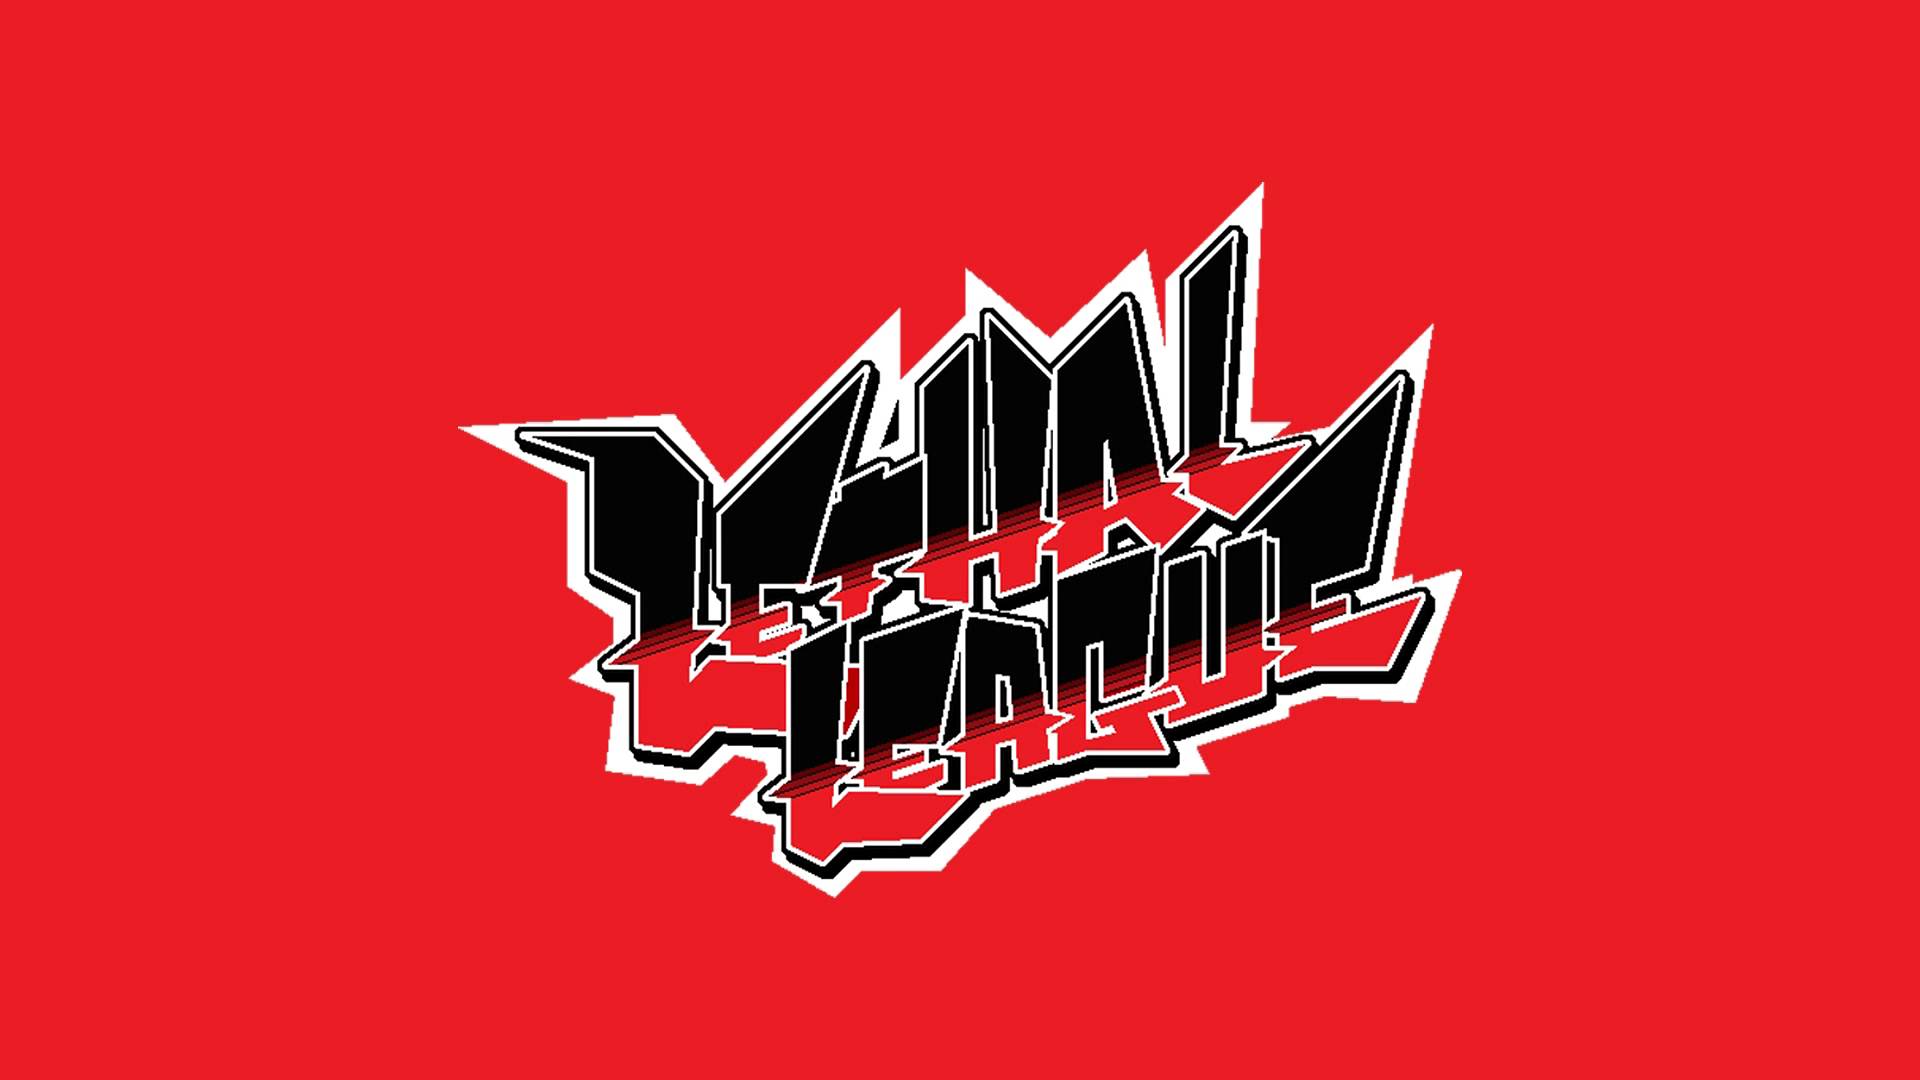 Lethal company beta. Lethal League. Lethal League logo. Lethal League Wallpapers. Lethal Culture logo.